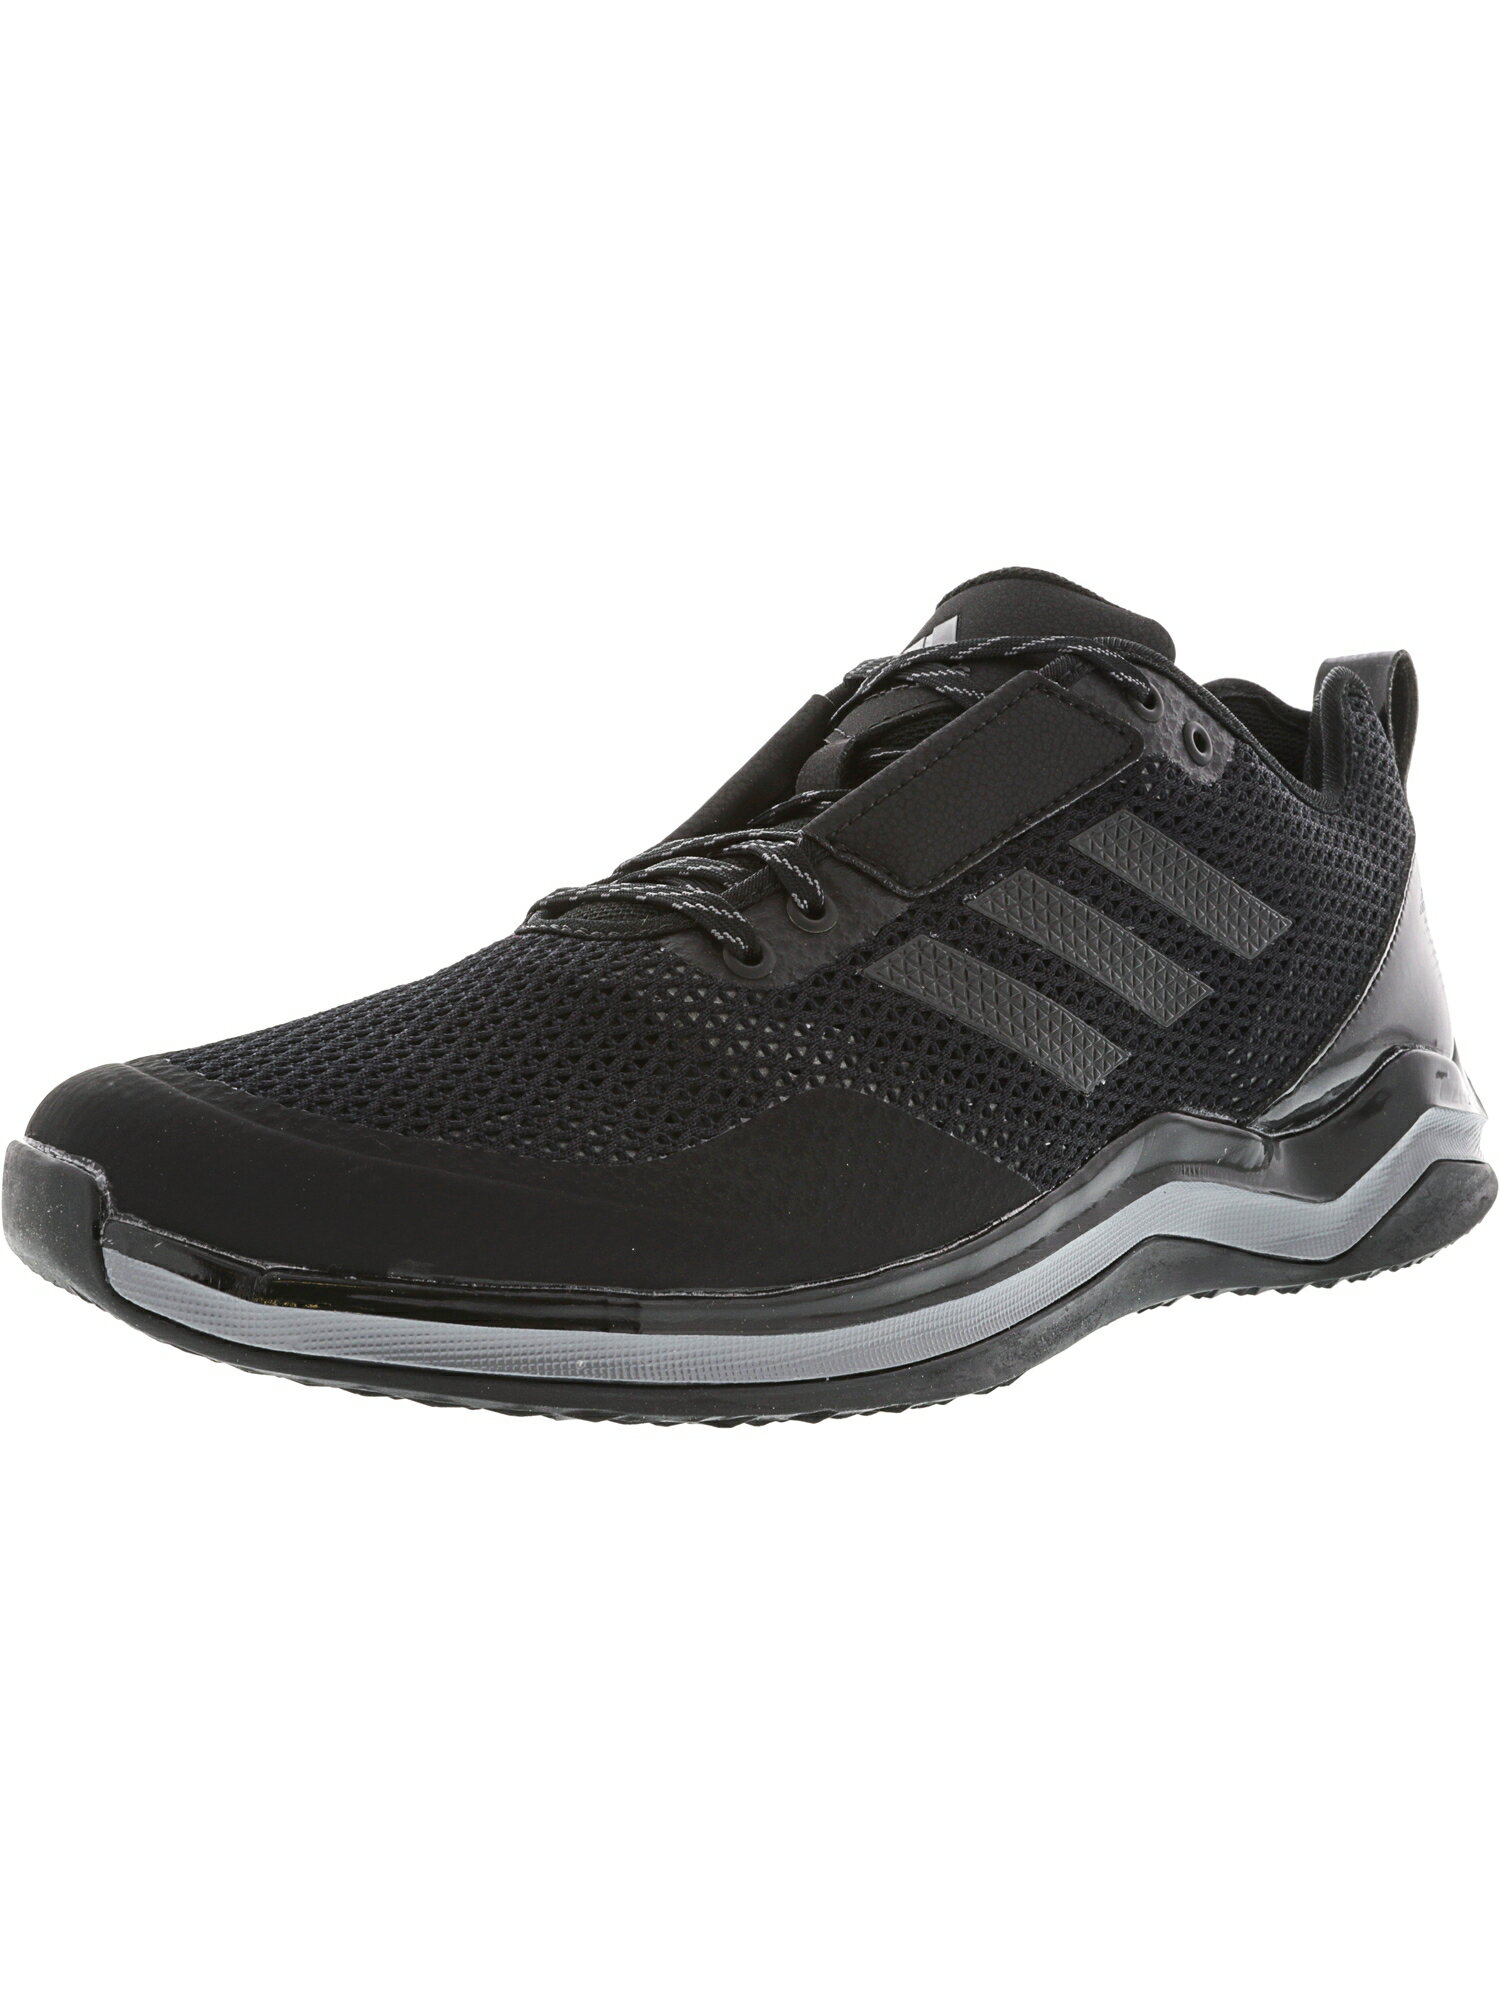 Adidas Men's Speed Trainer 3.0 Core Black / Iron Metallic Ankle-High ...